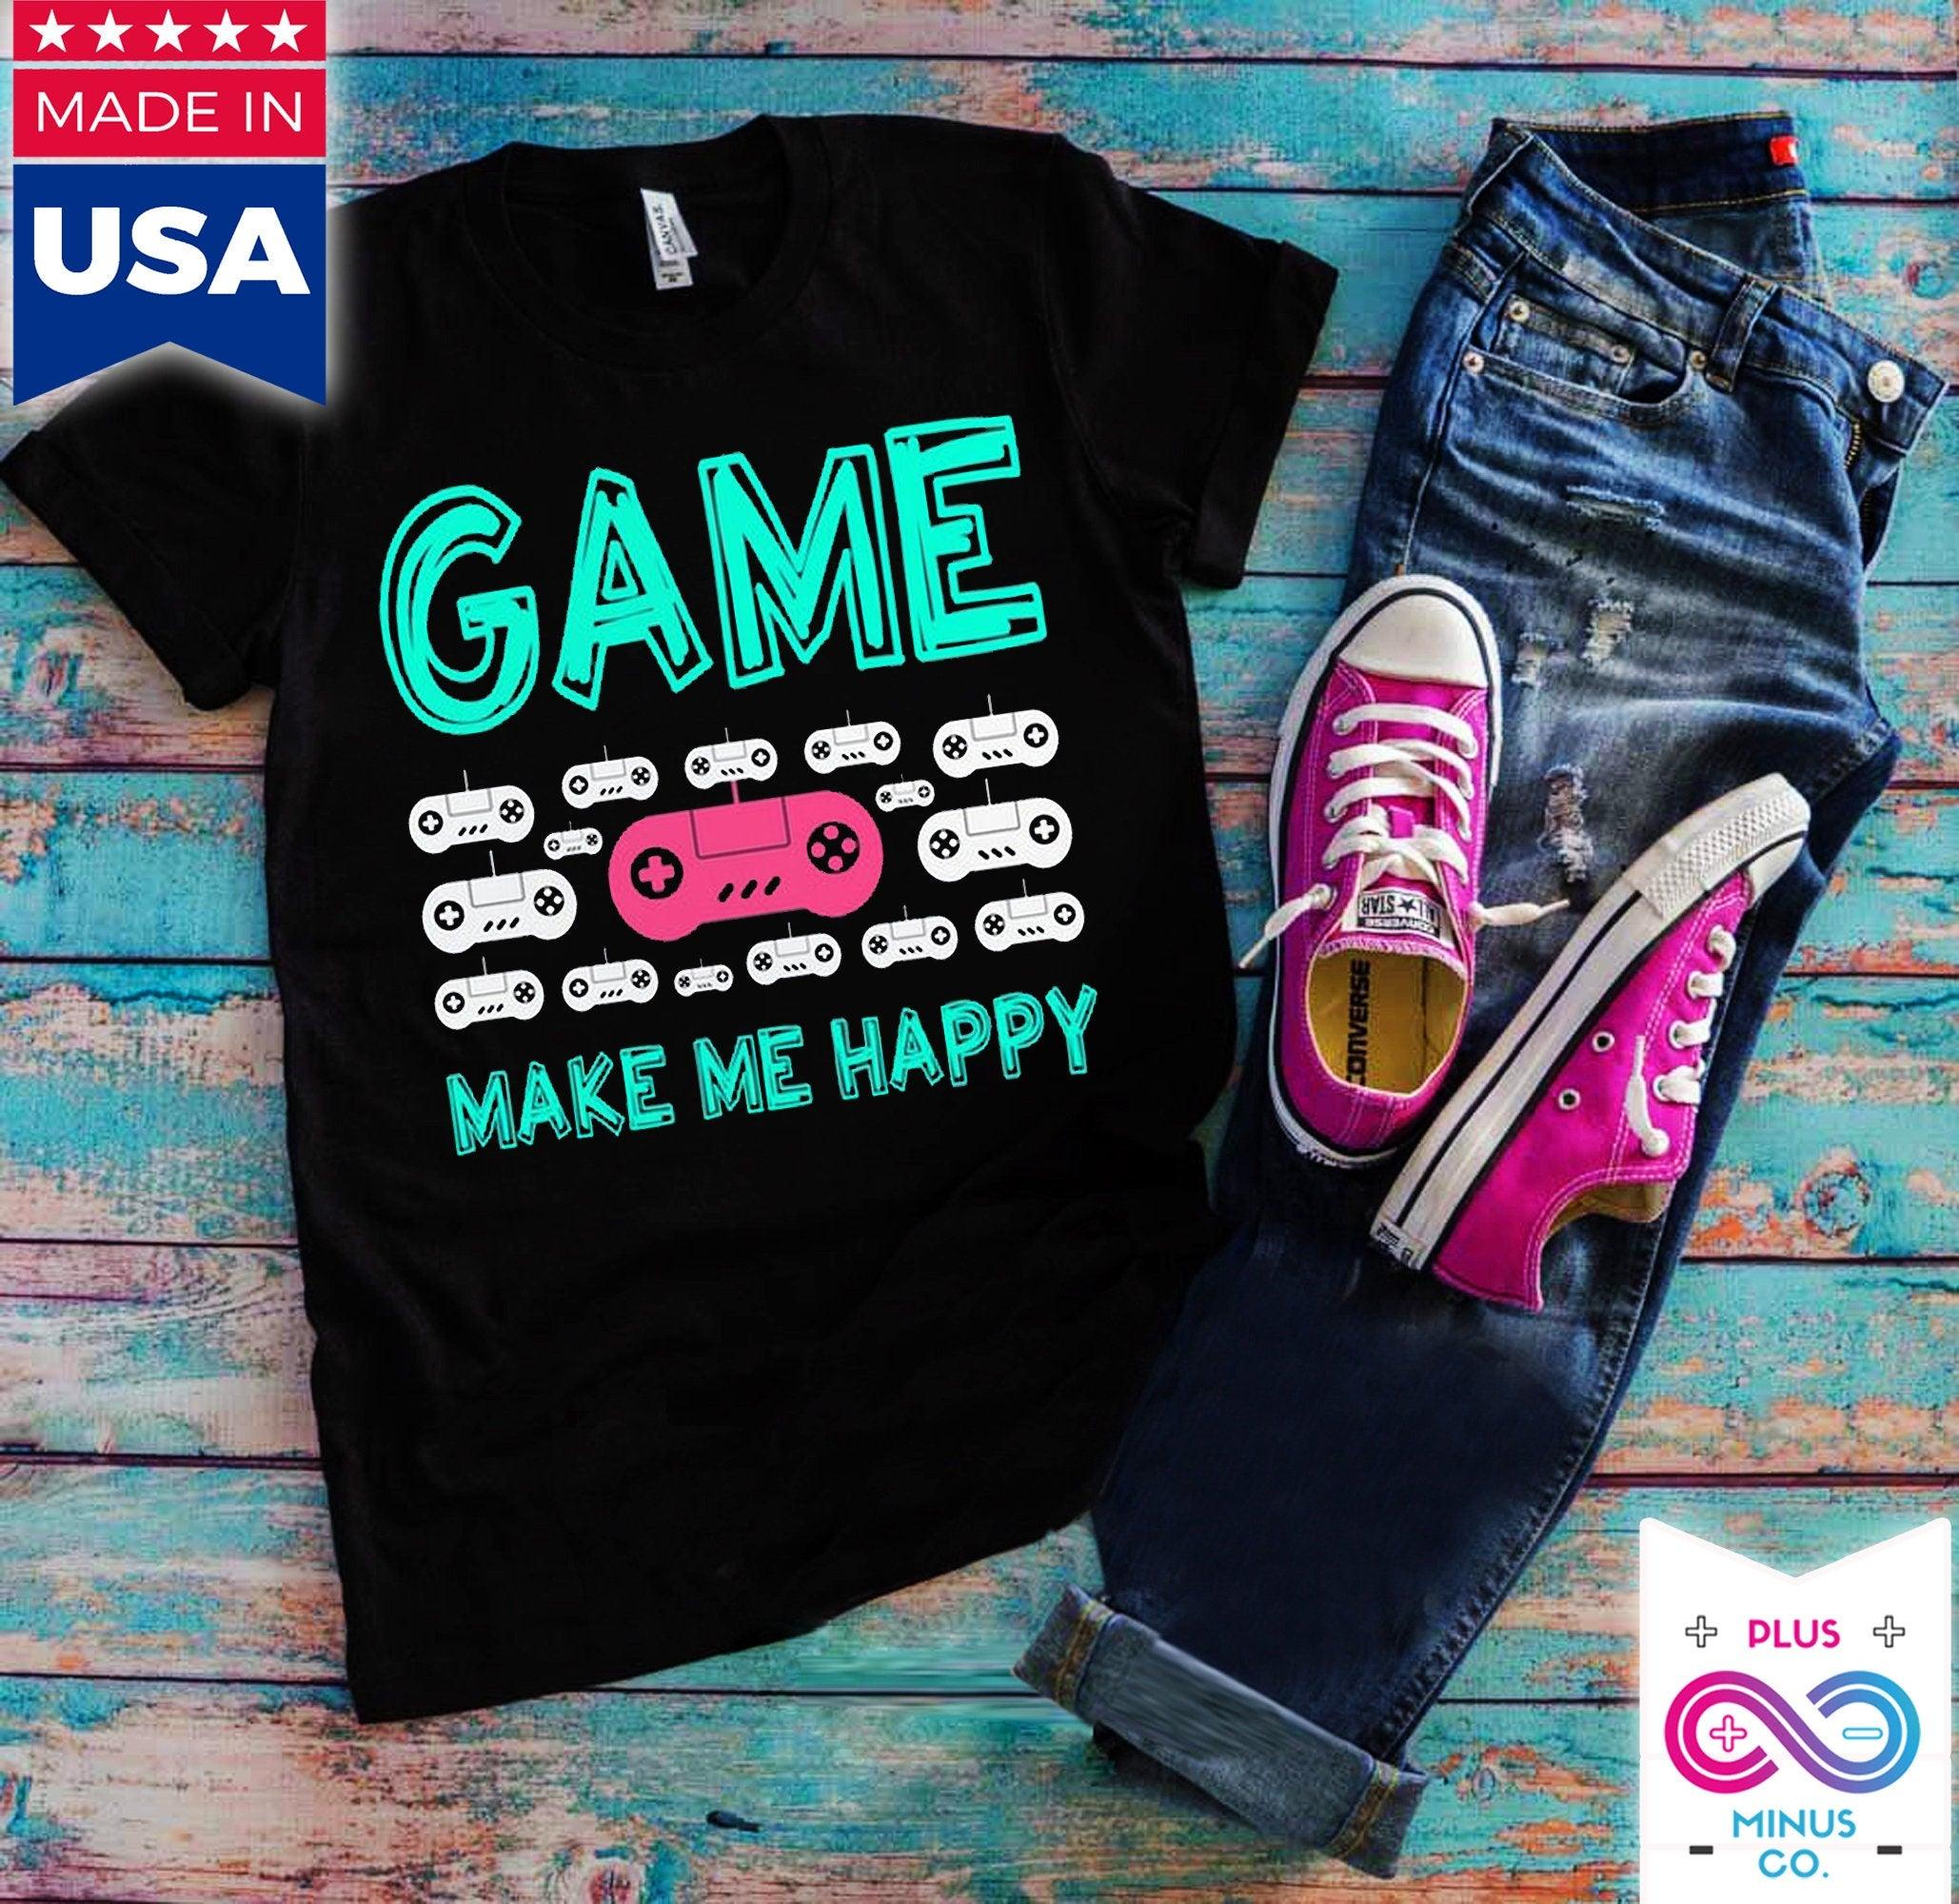 Camisetas Game Make Me Happy, videojuegos, consolas de juegos, camiseta divertida para jugadores || Camiseta Gaming Gamer Novio - plusminusco.com